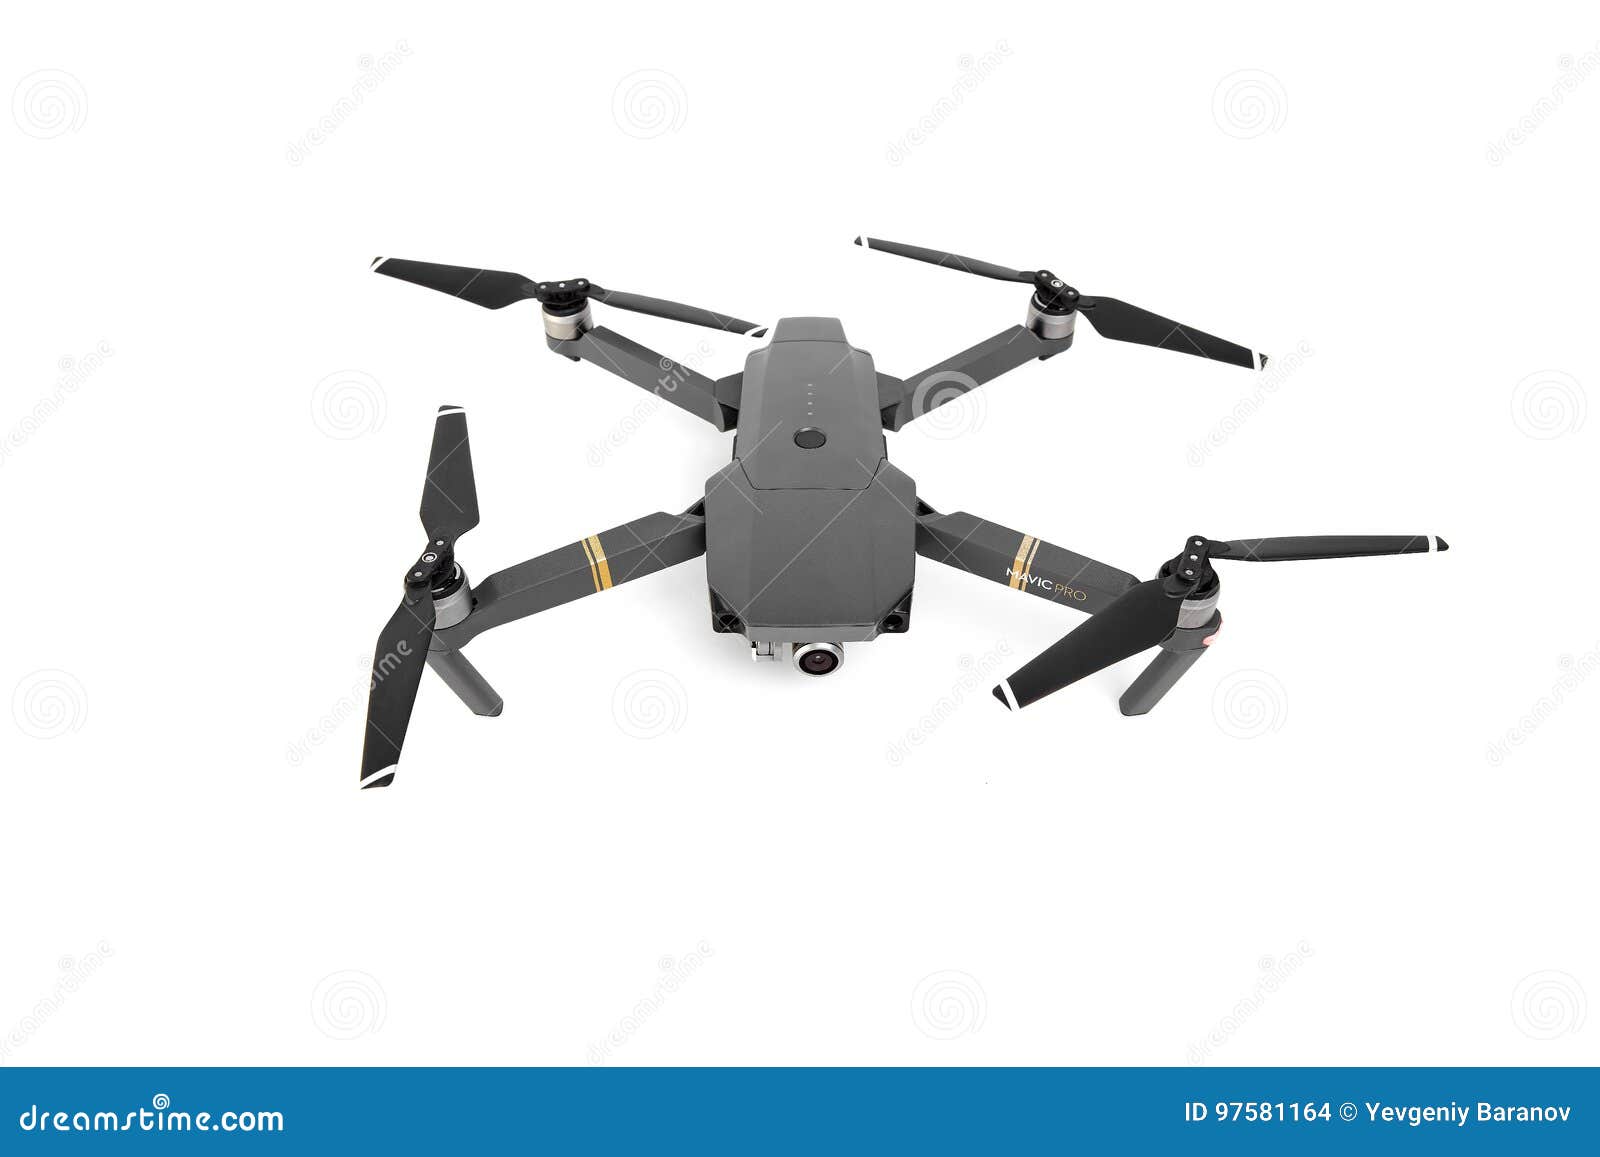 Dji Mavic Pro Drone In Flight On White Background Editorial Stock Image Image Of Black Quadcopter 97581164